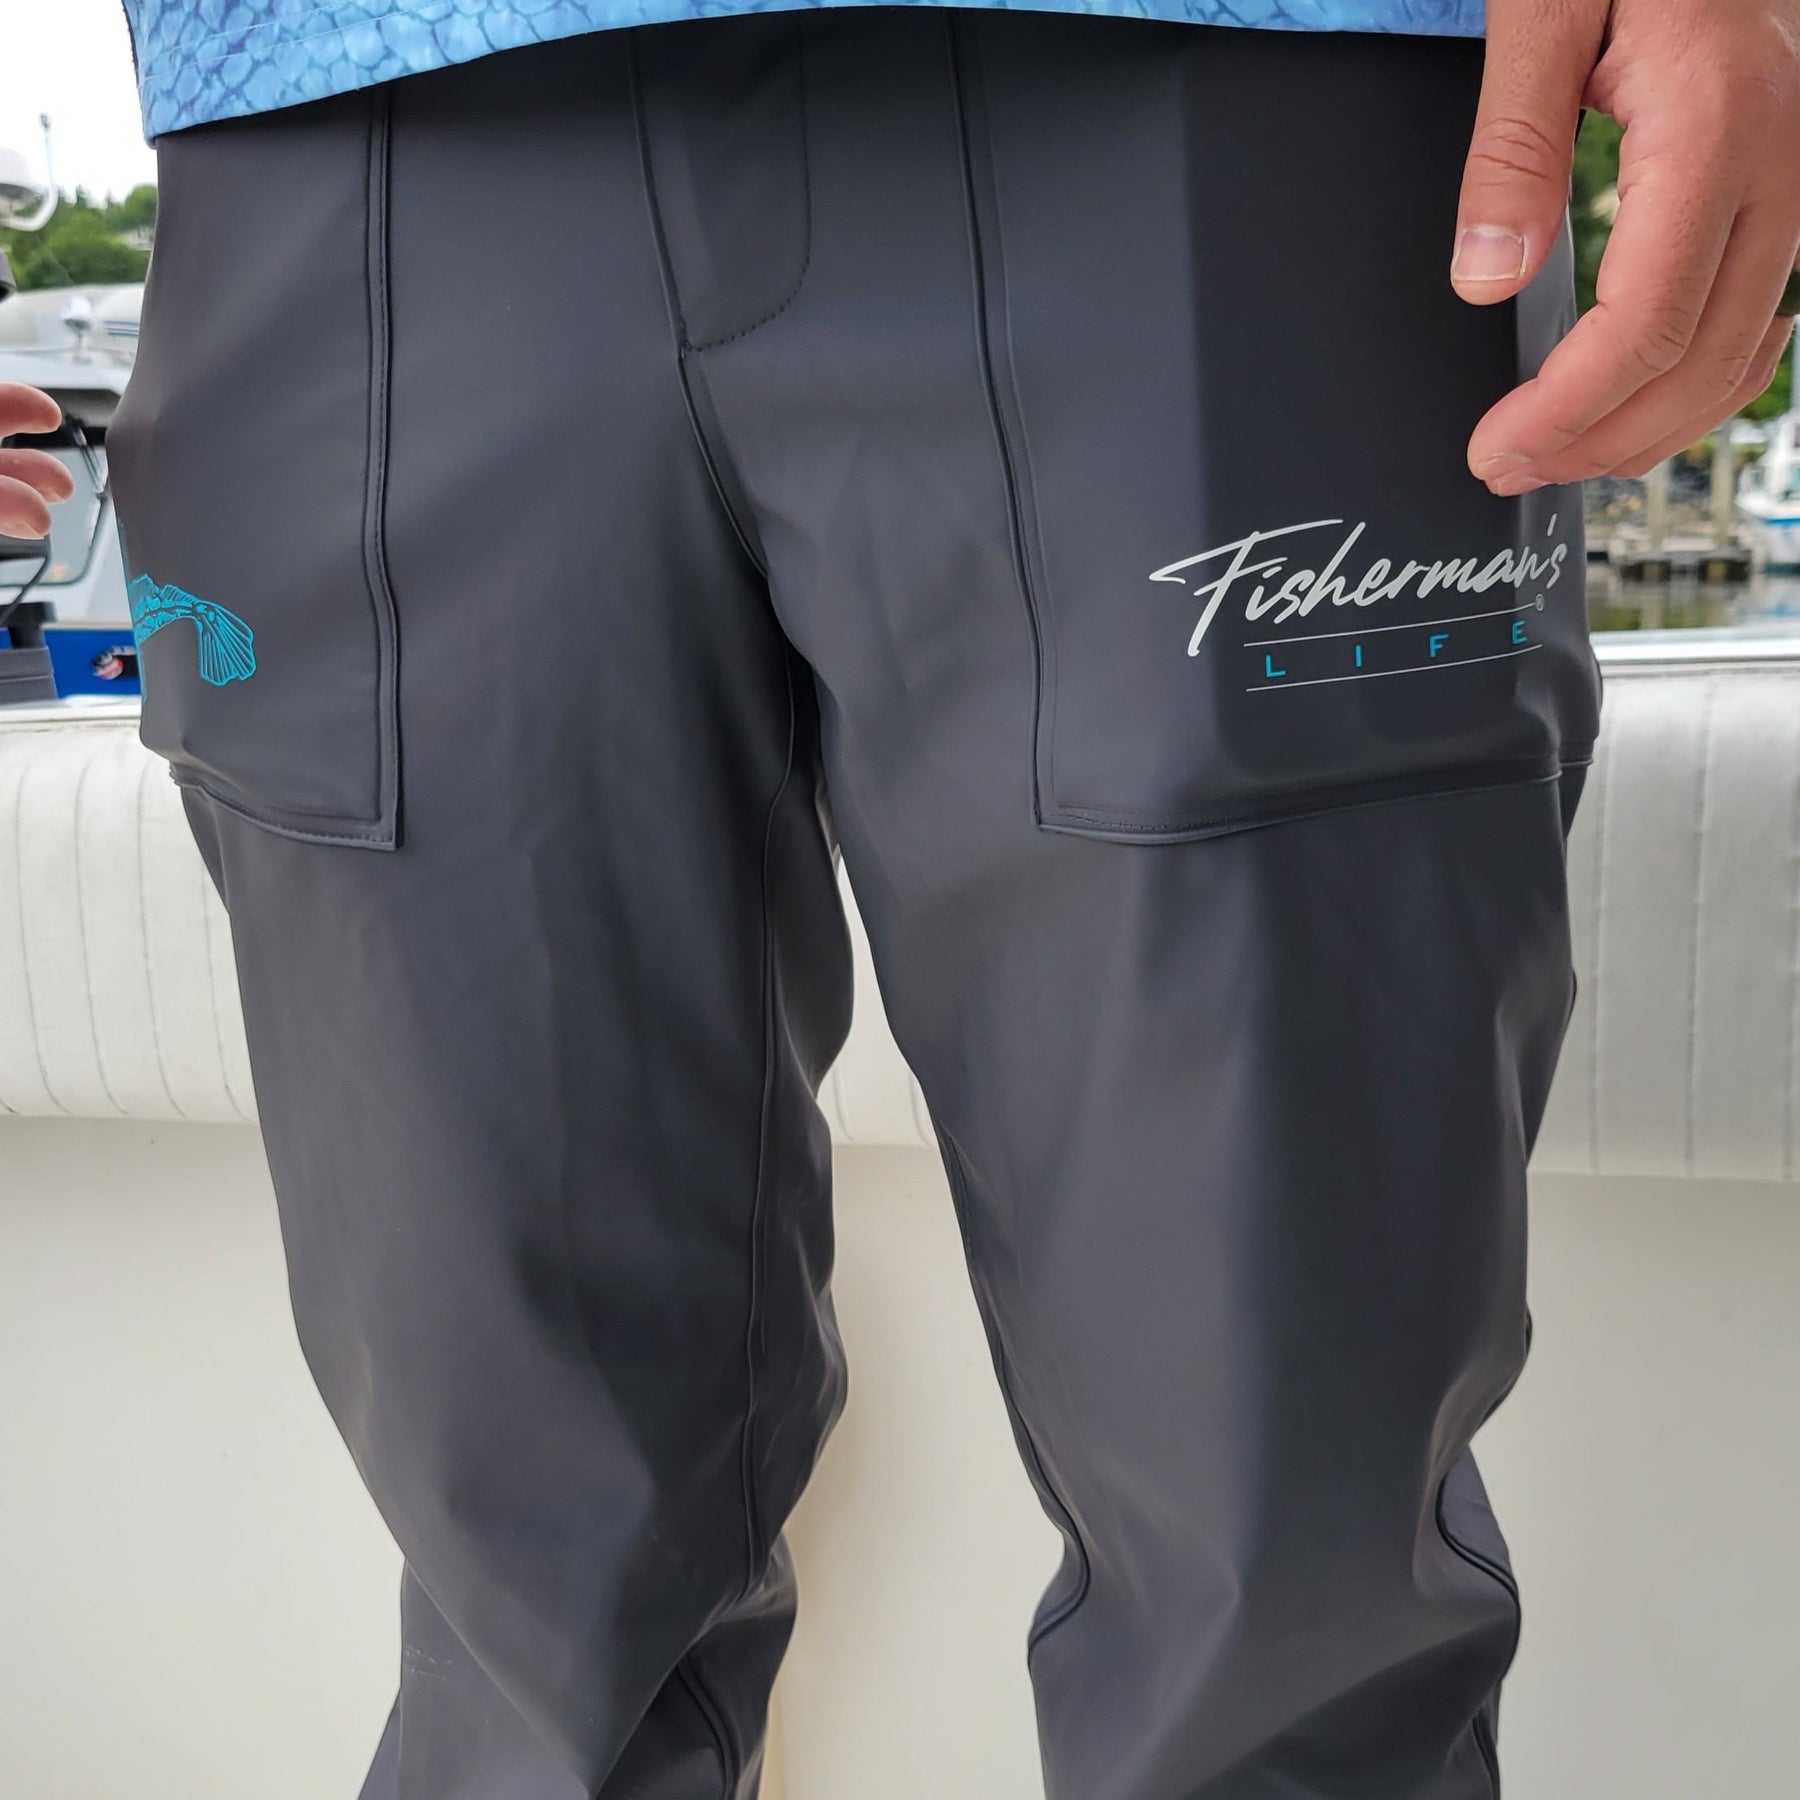 Ultimate Waterproof Pants (Fleece Lined) 10,000 mm Rated X-Large